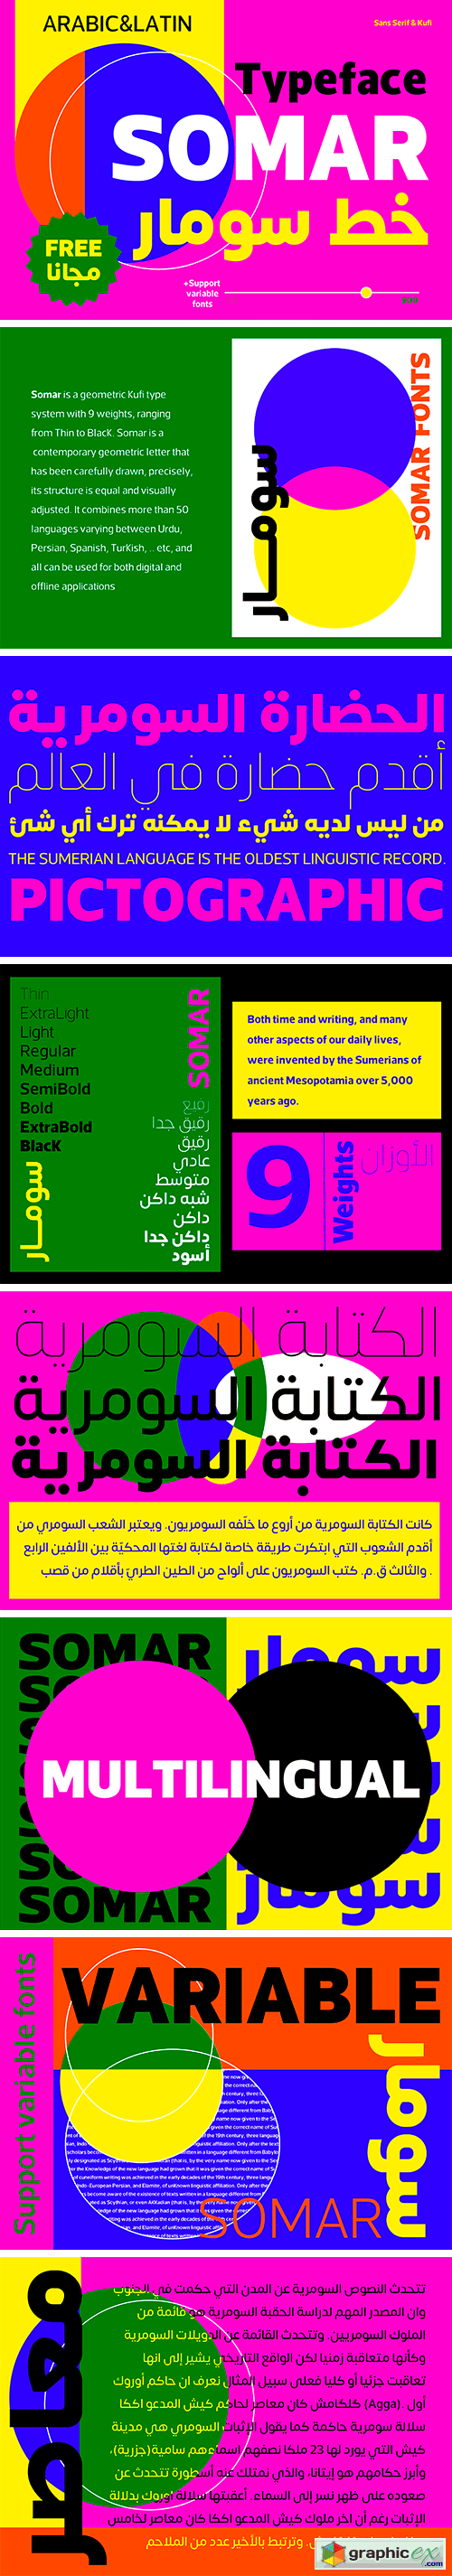  Somar - Arabic Typeface 